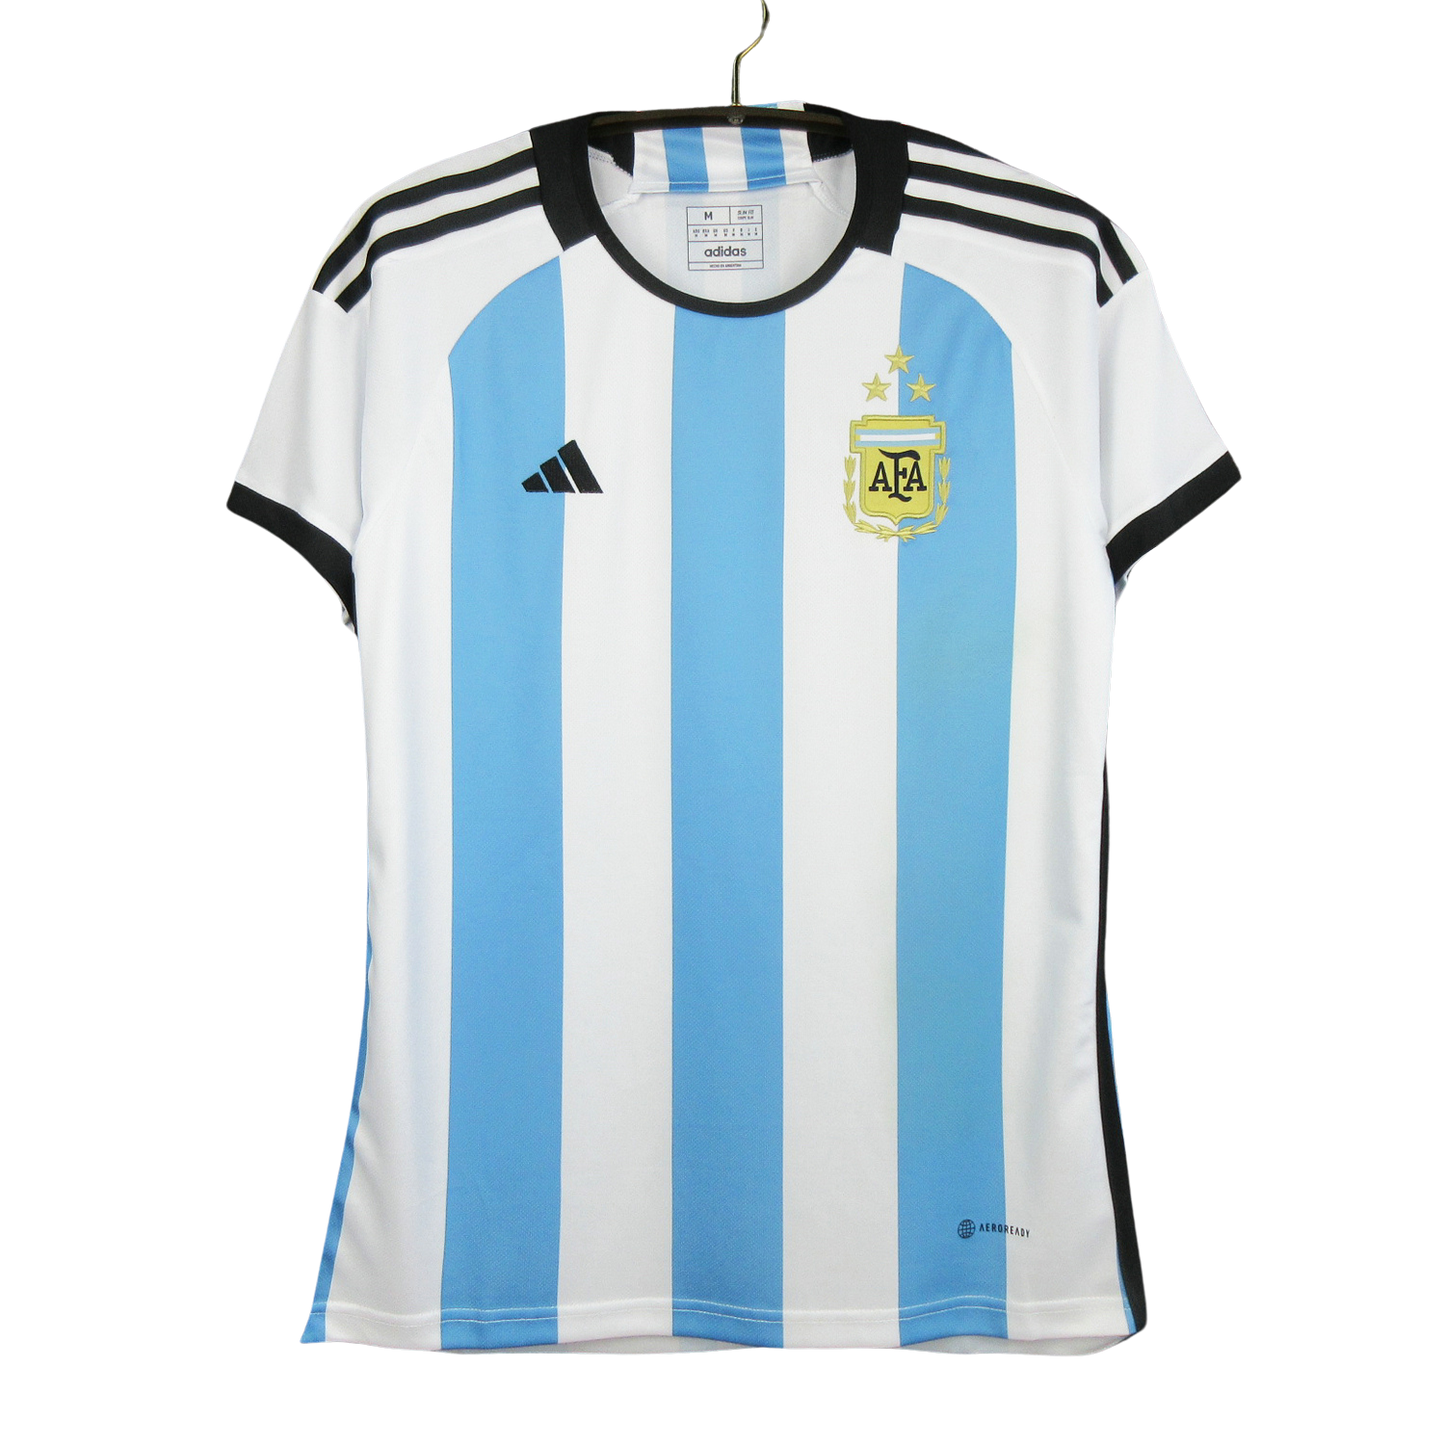 22/23 Argentina Home kit - Fan version